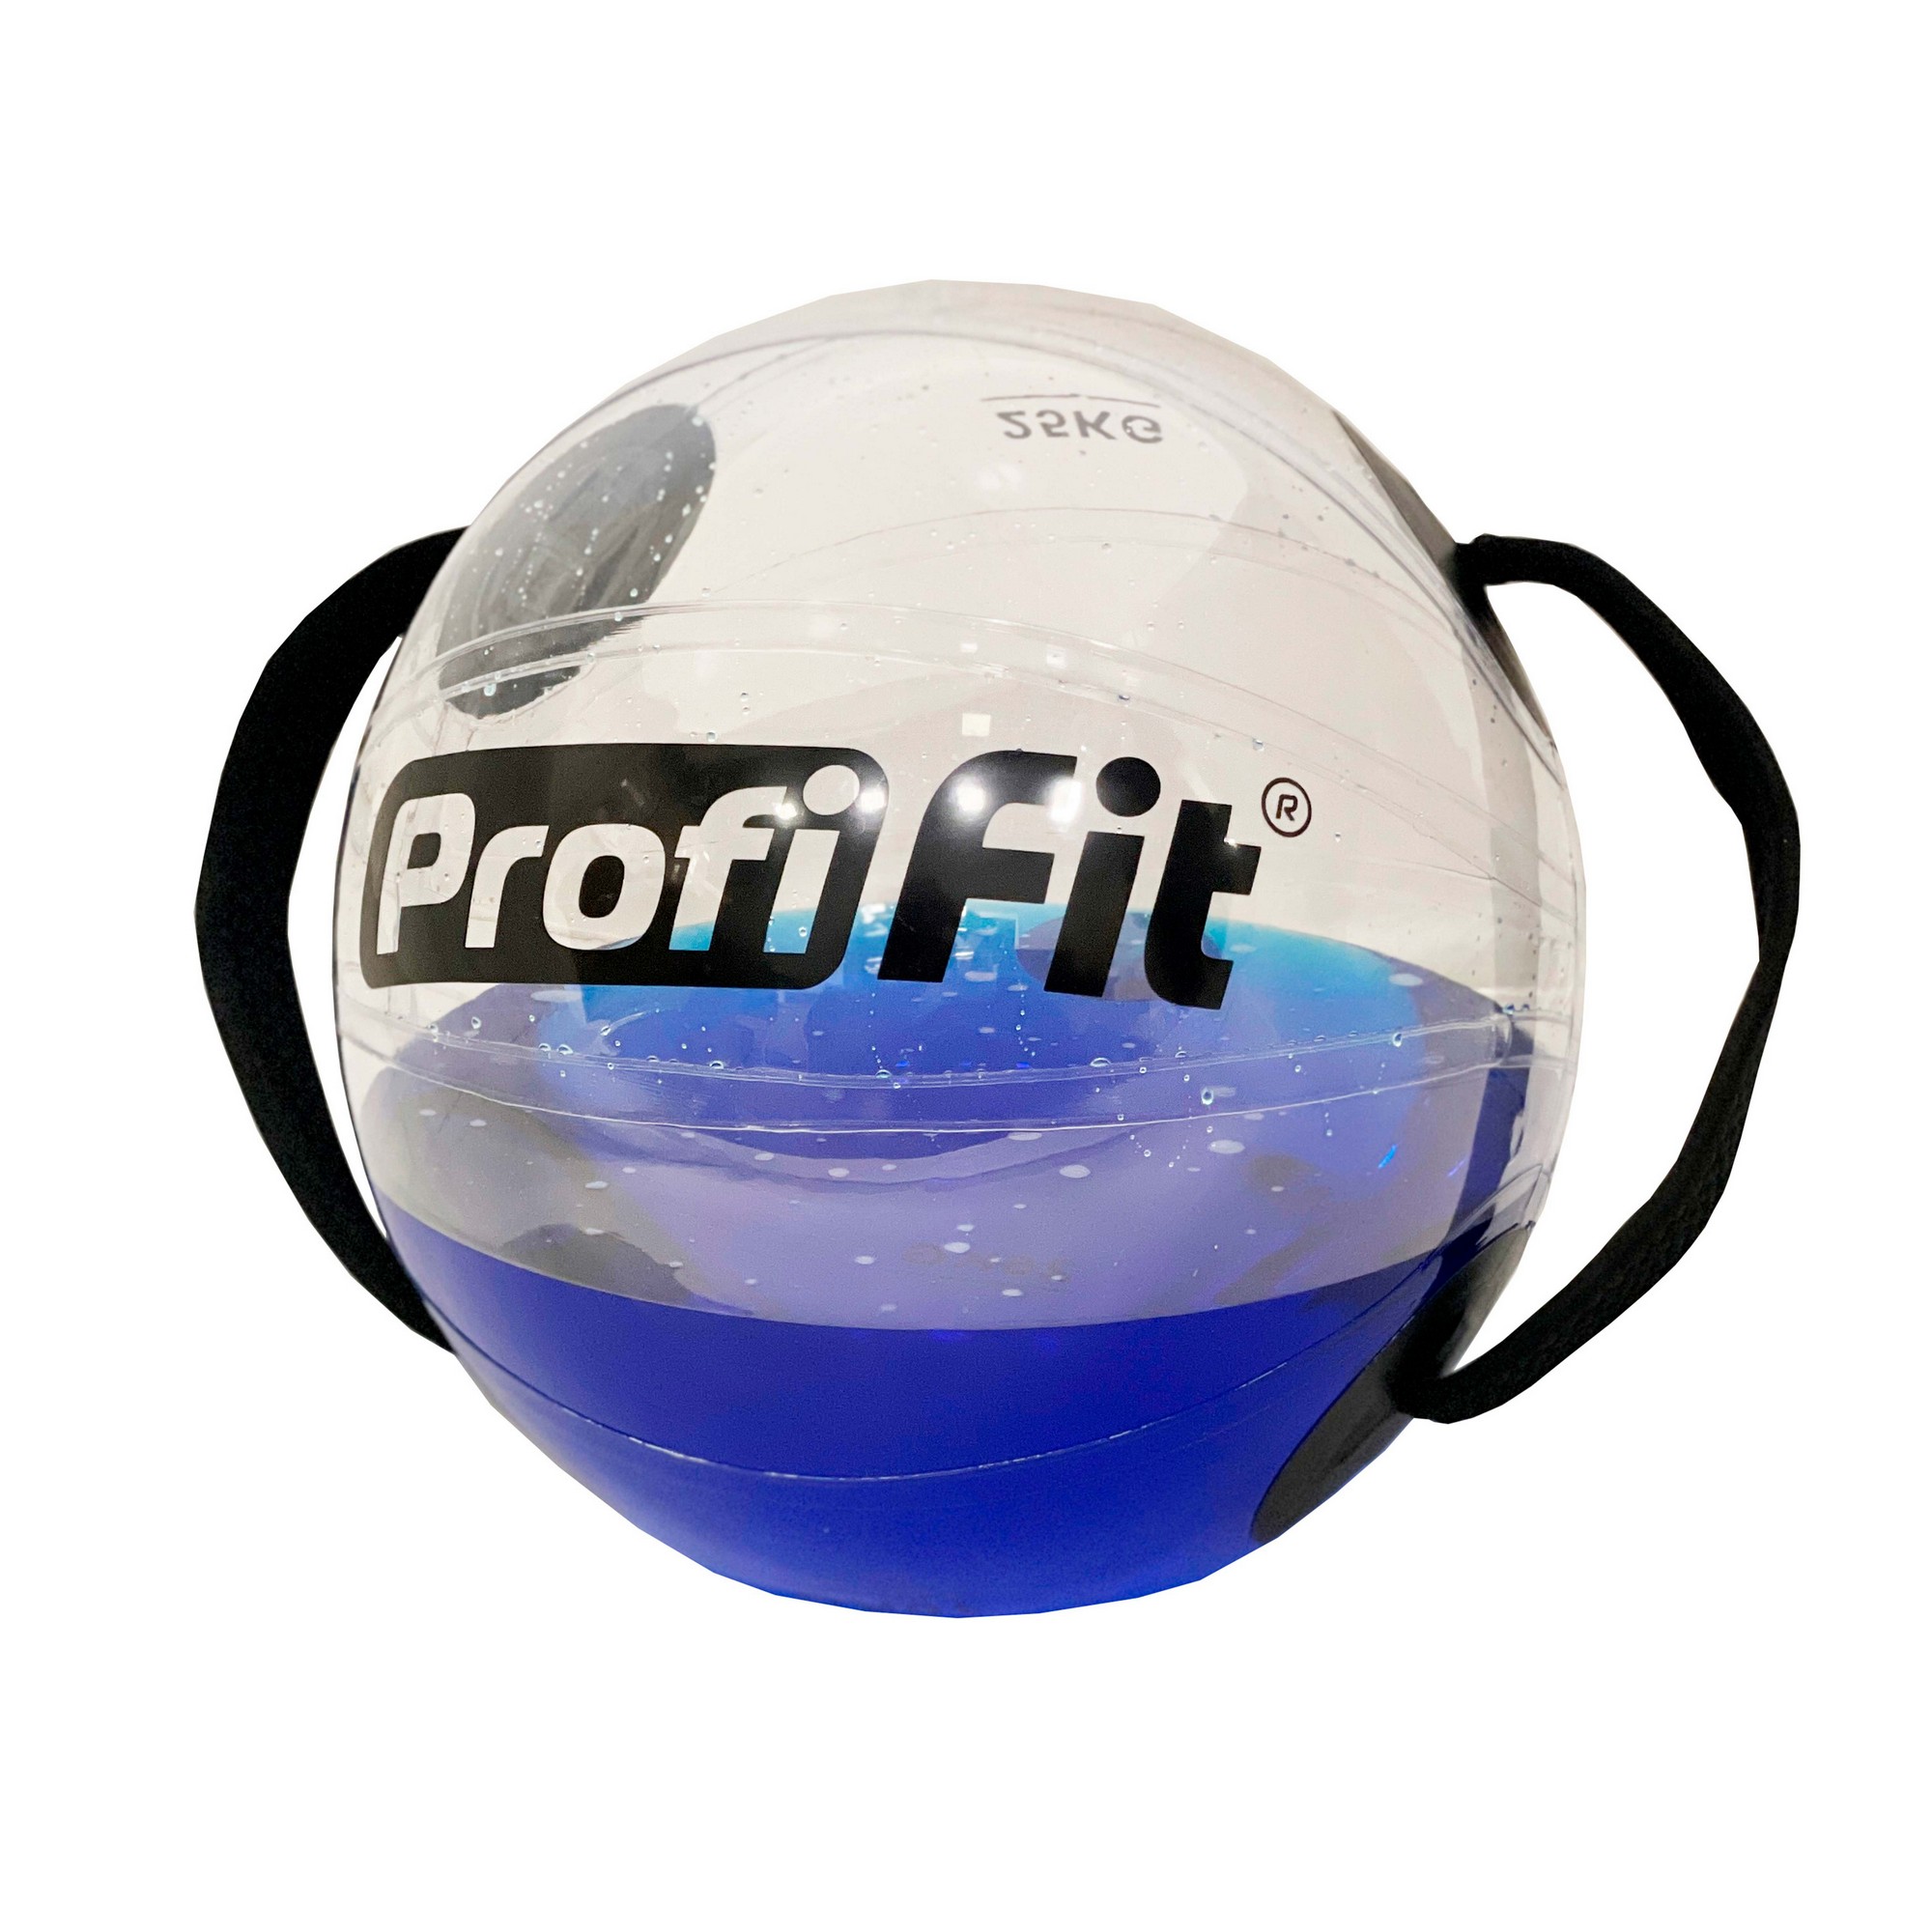     Profi-Fit Water Ball d40 